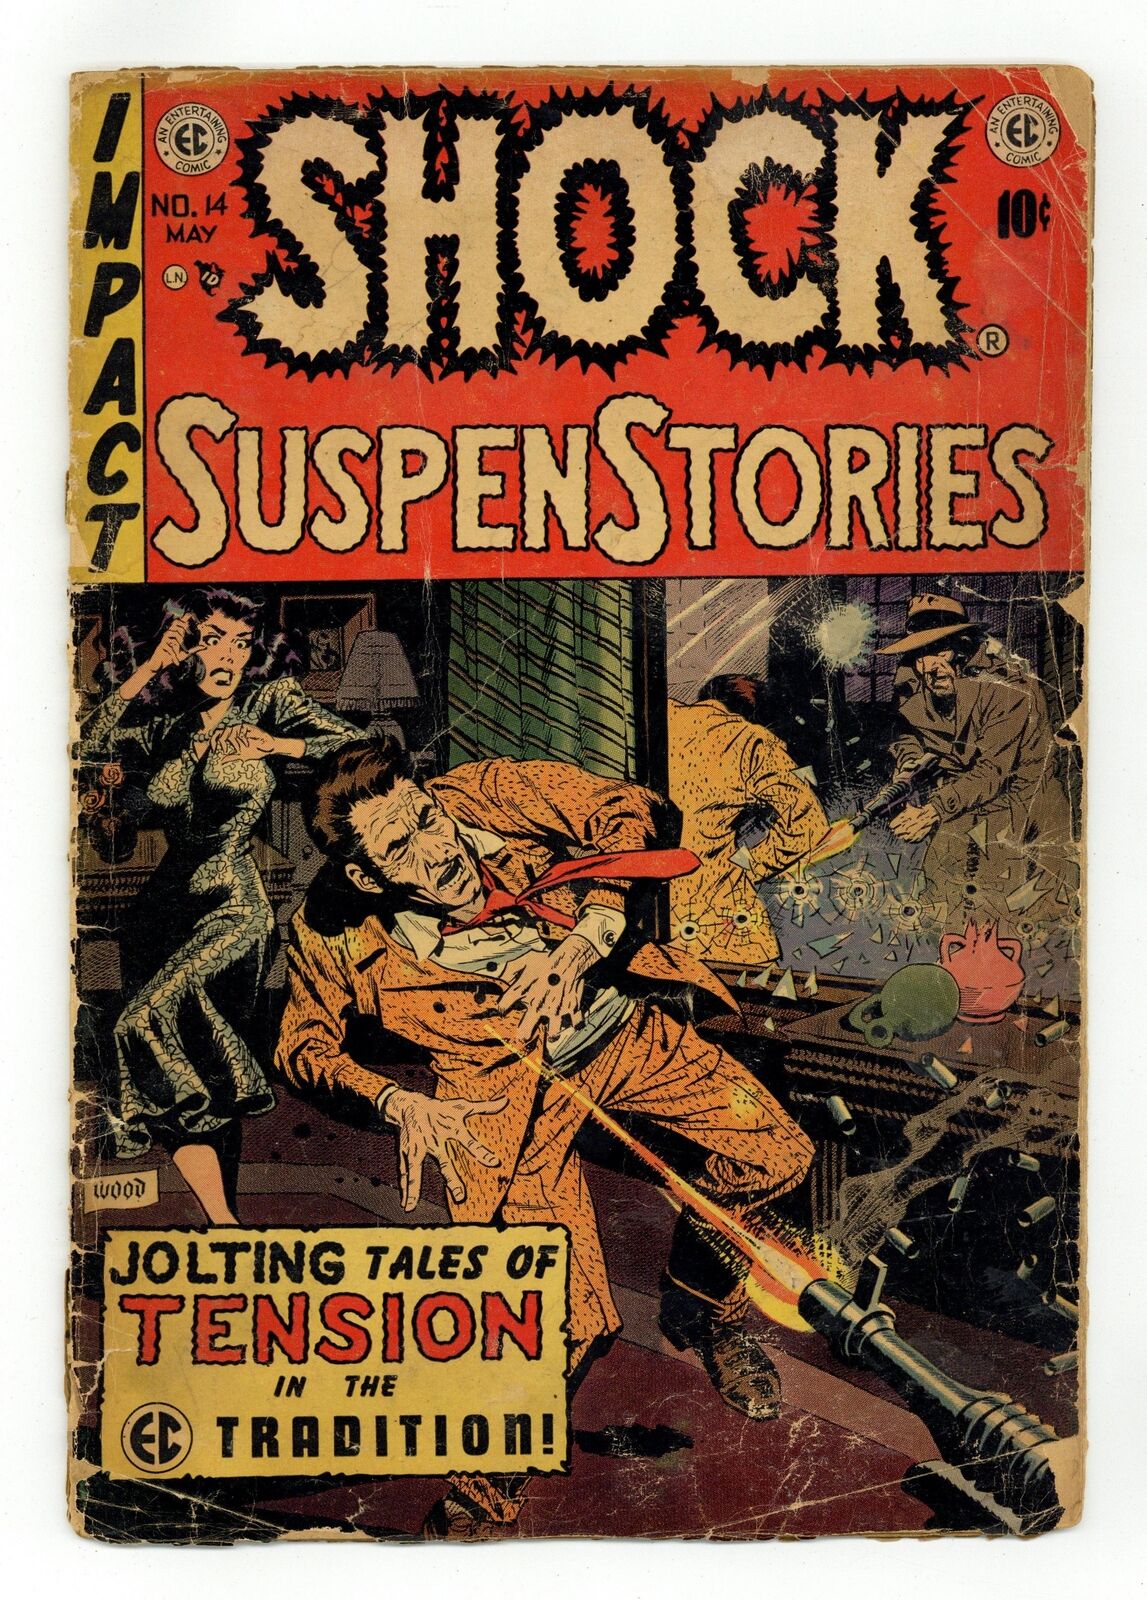 Shock Suspenstories #14 PR 0.5 1954